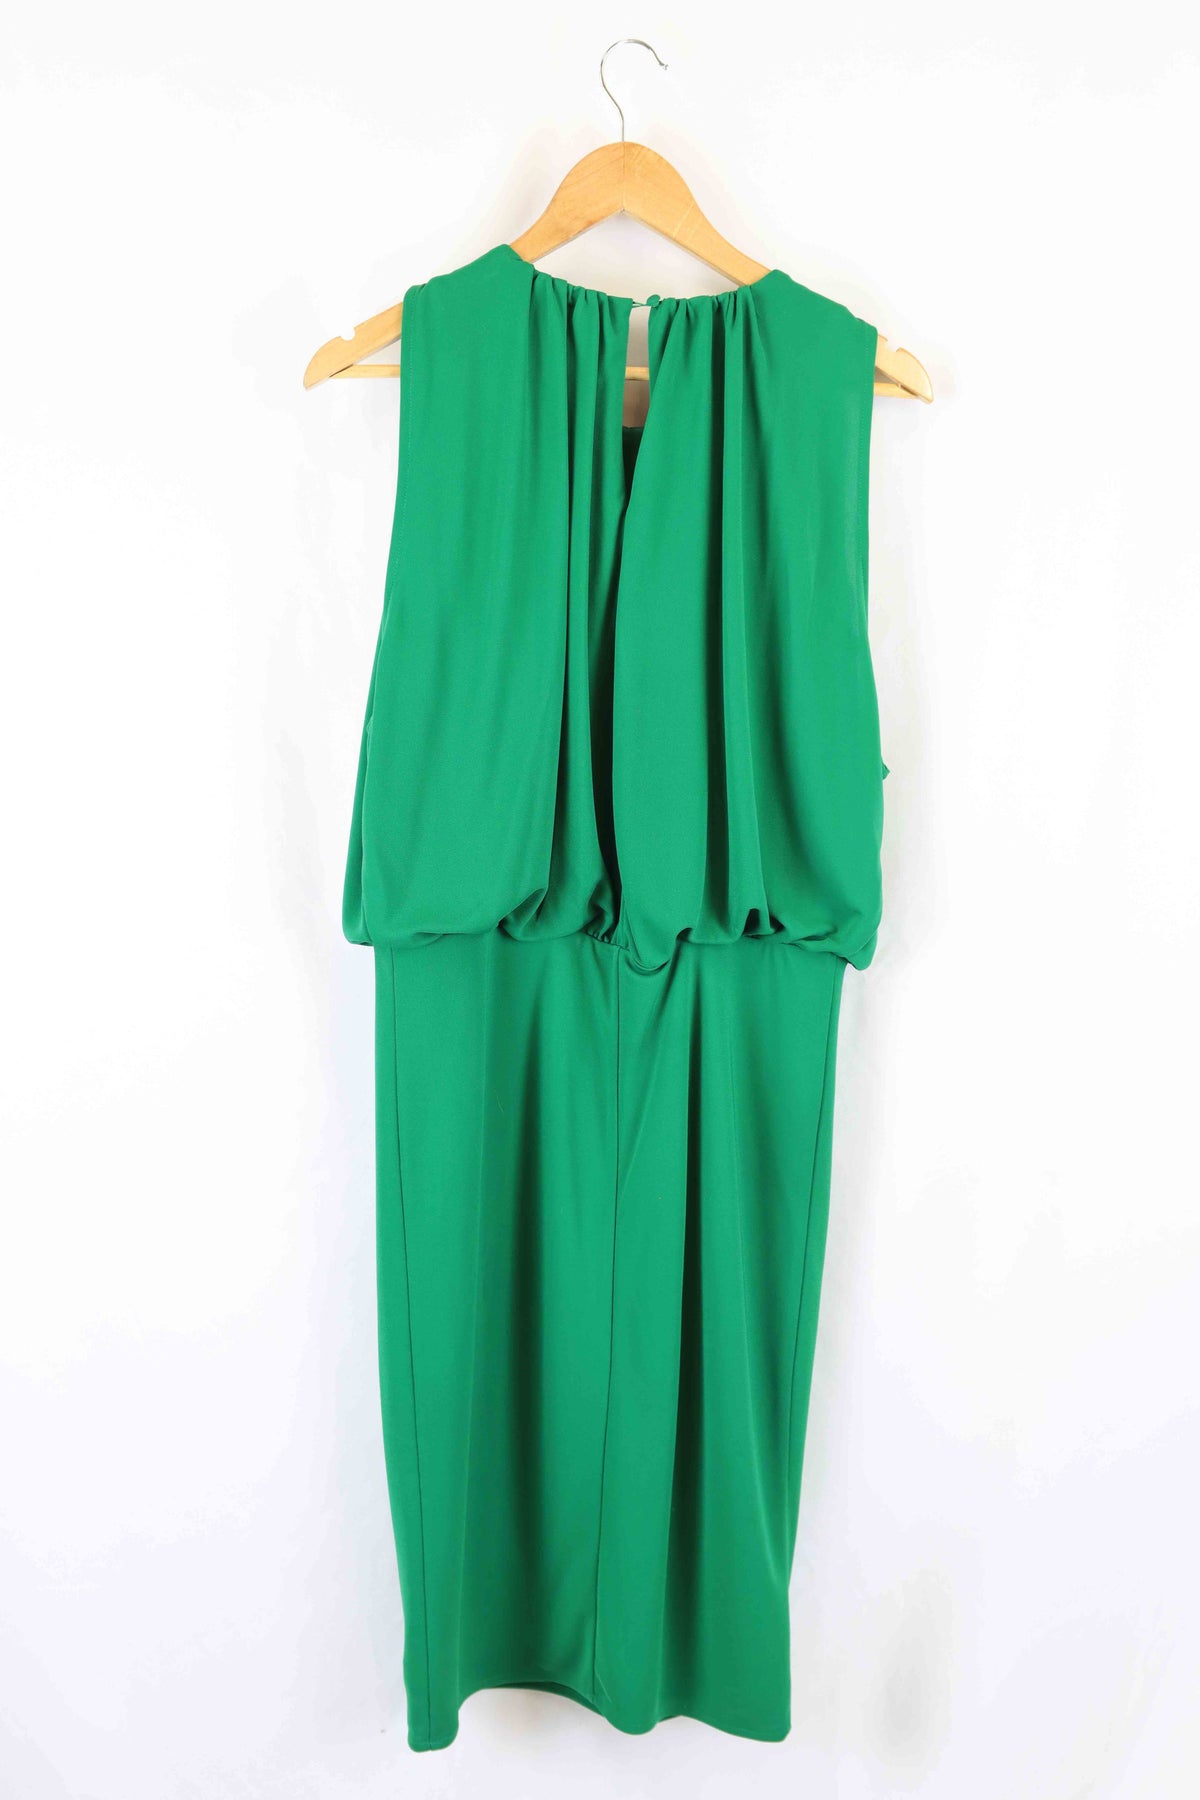 Next Petites Green Dress 12